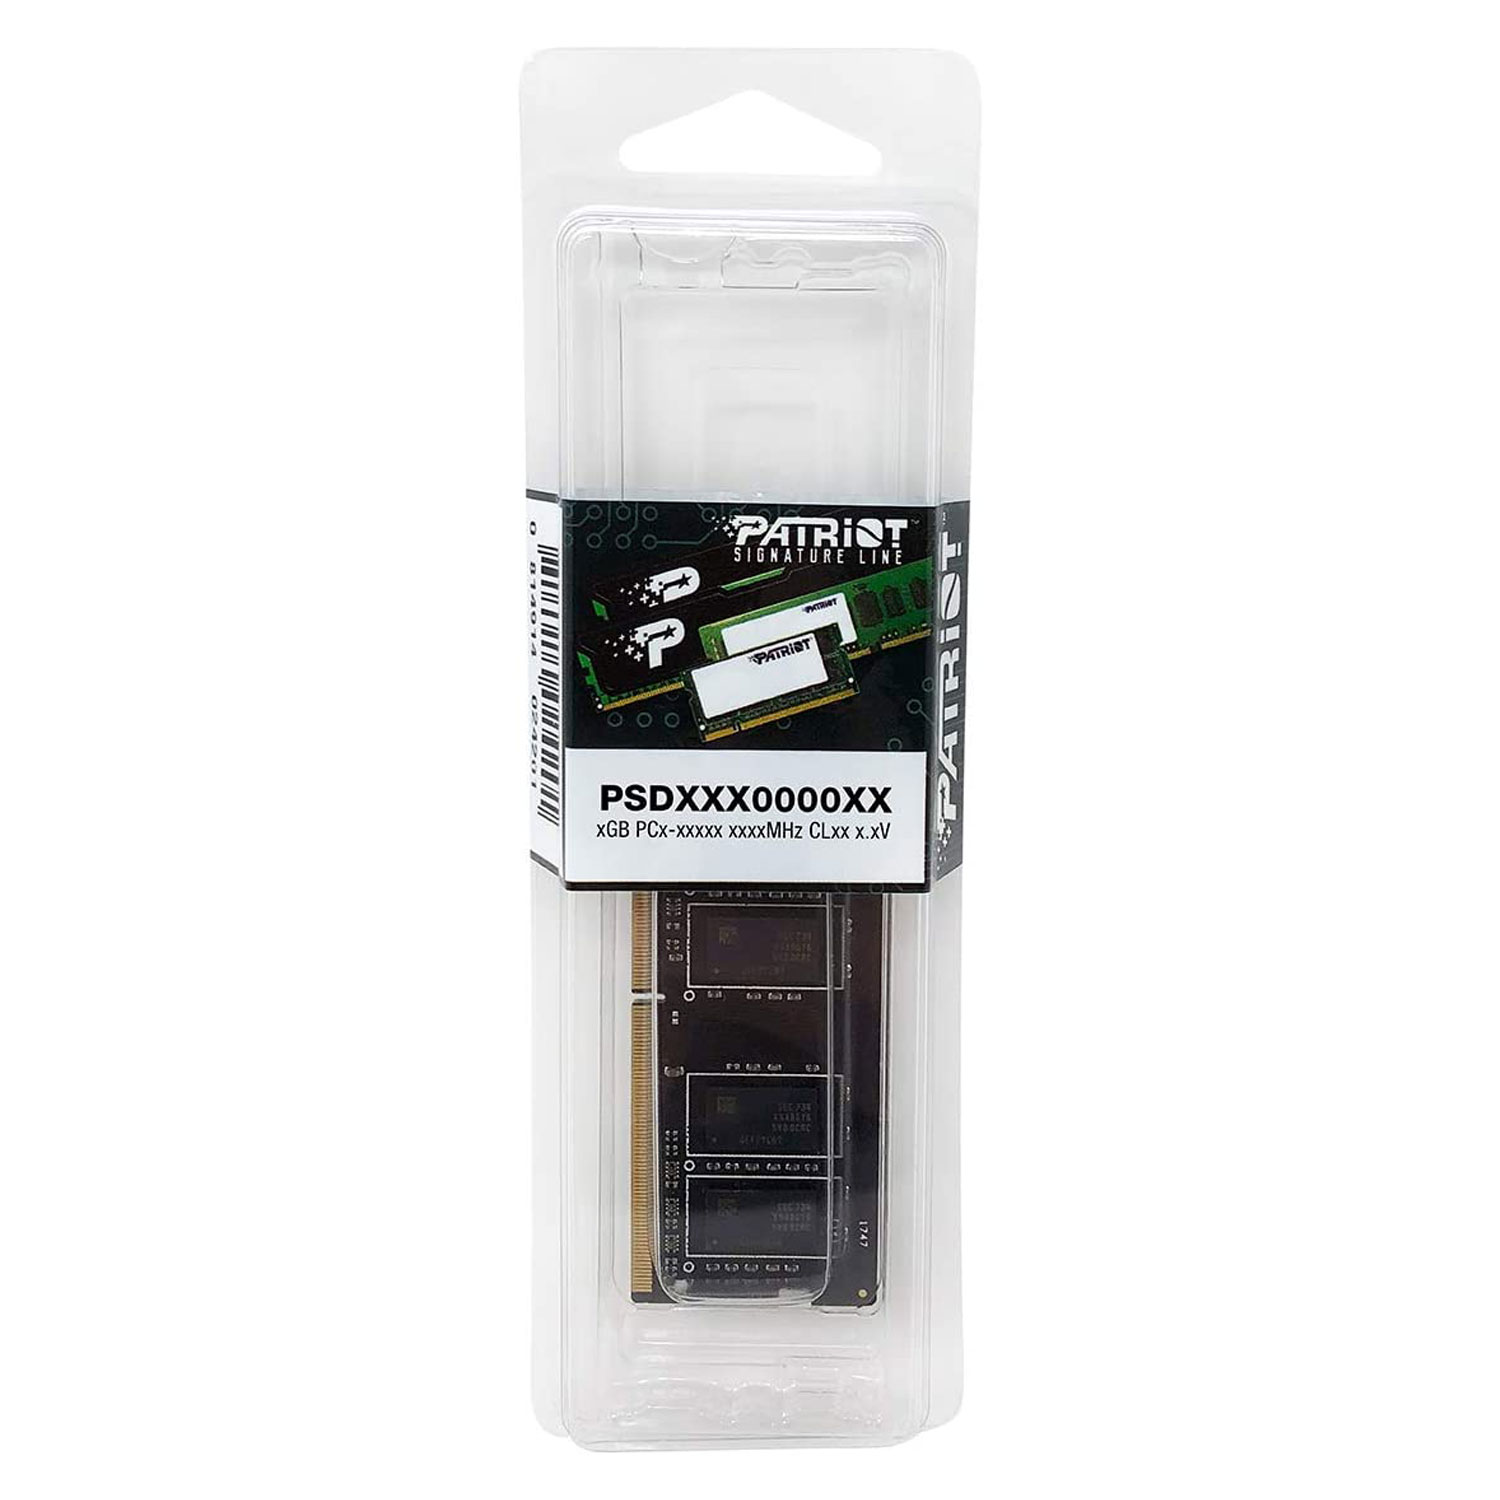 Memória para Notebook Patriot 16GB / DDR4 / 2400MHz / 1X16GB - (PSD416G240081S)